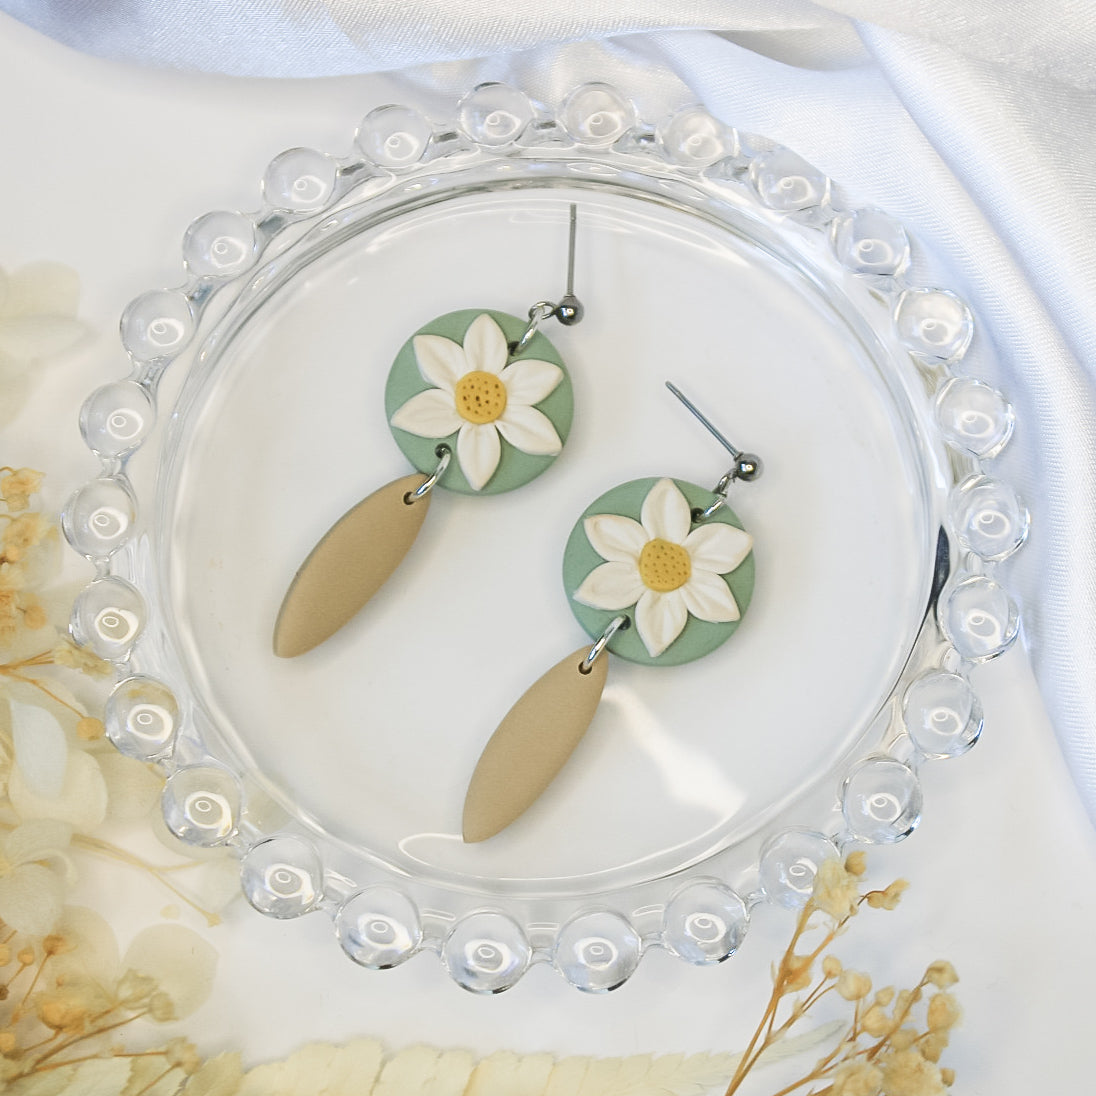 Polymer clay daisy earrings – handmade floral jewelry